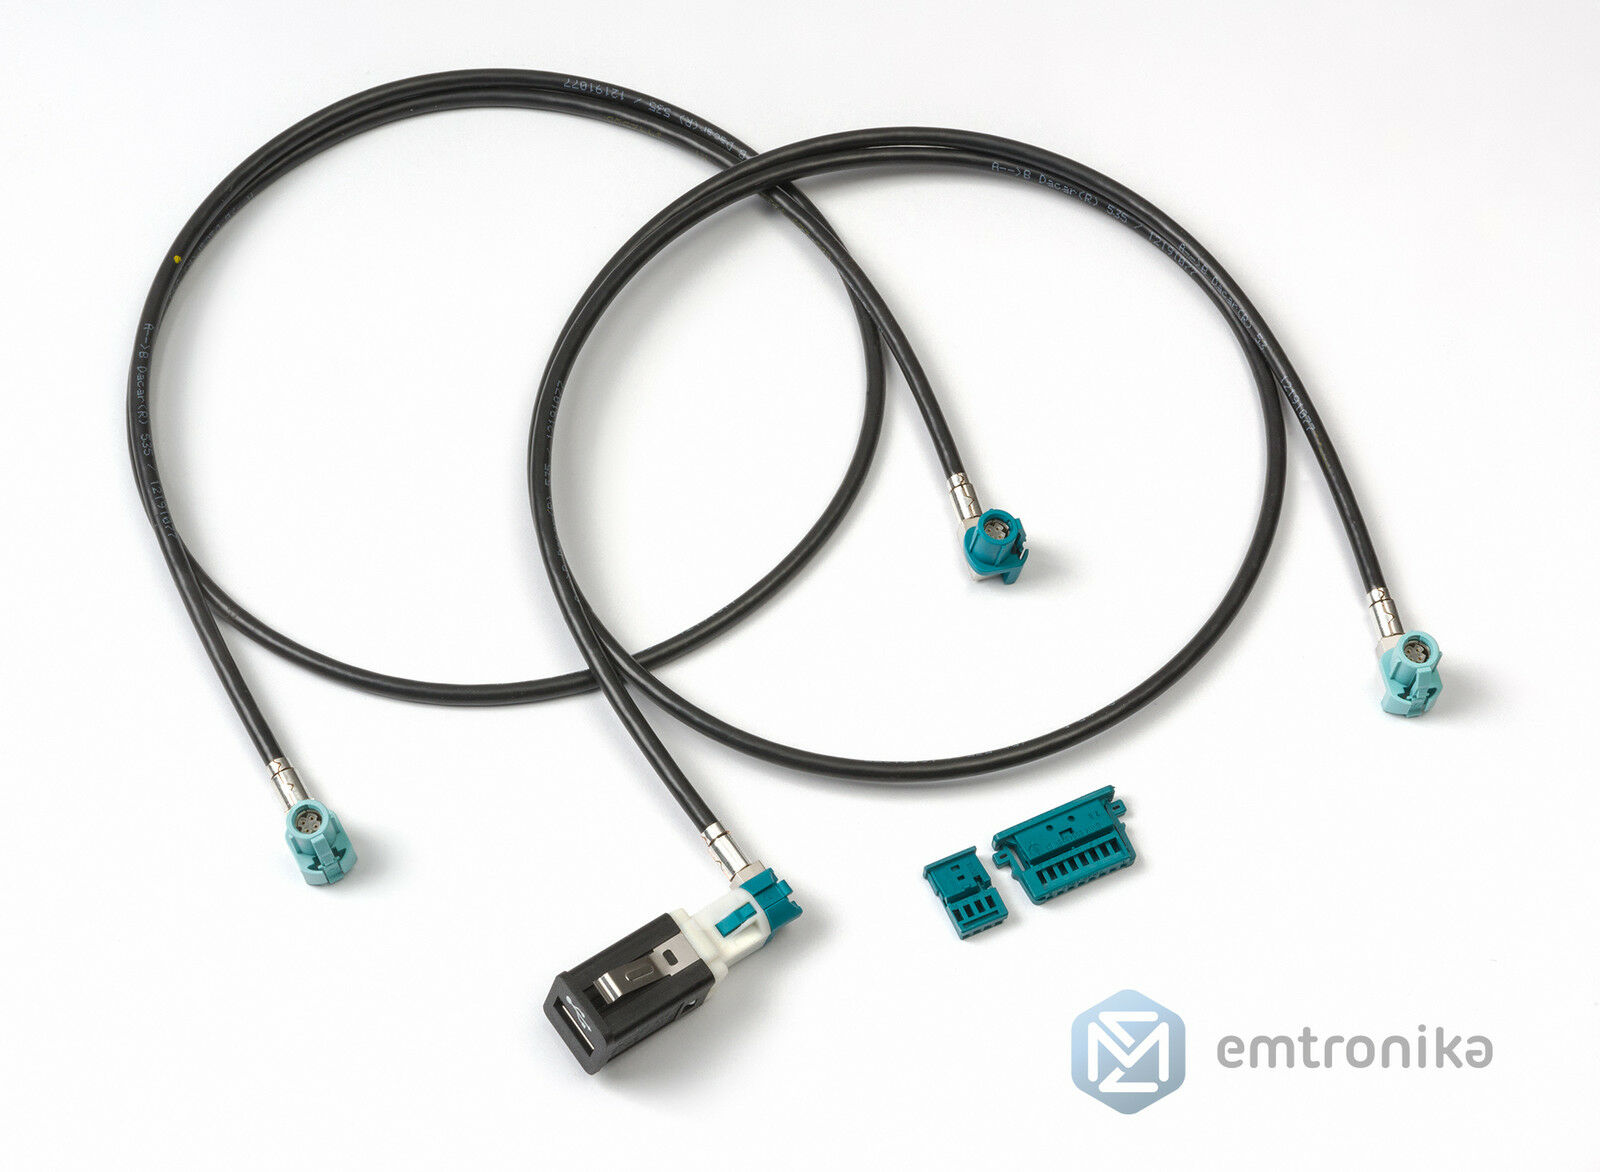 Bmw Cic Retrofit Upgrade Kit For E70 E60 E90 Monitor Video Usb Cables Sockets